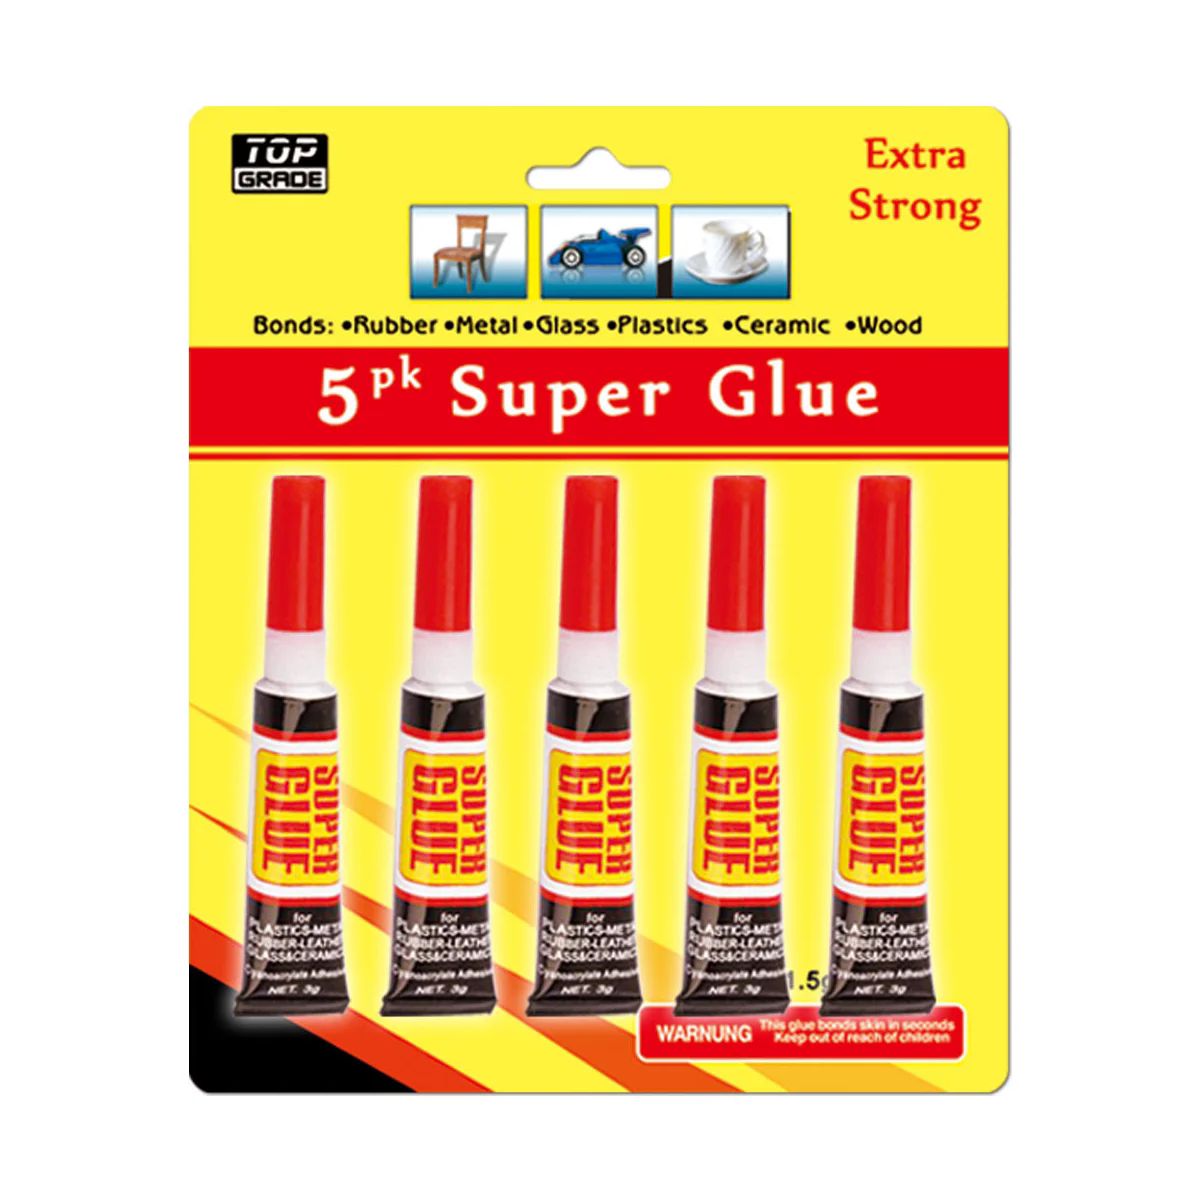 24 Packs of Super Glue